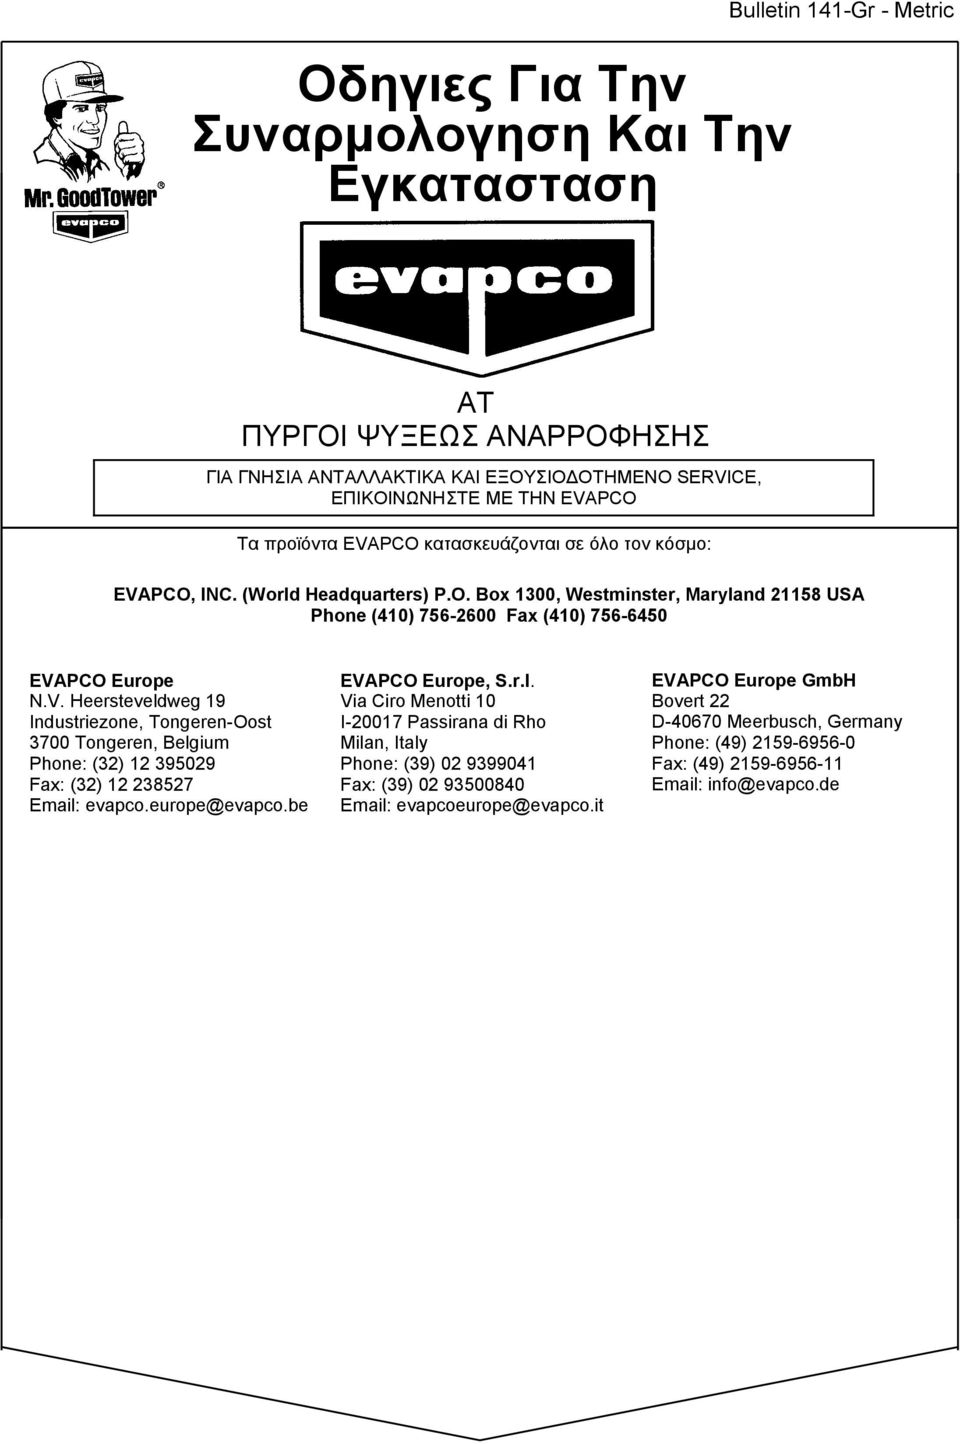 europe@evapco.be EVAPCO Europe, S.r.l. Via Ciro Menotti 10 I-20017 Passirana di Rho Milan, Italy Phone: (39) 02 9399041 Fax: (39) 02 93500840 Email: evapcoeurope@evapco.